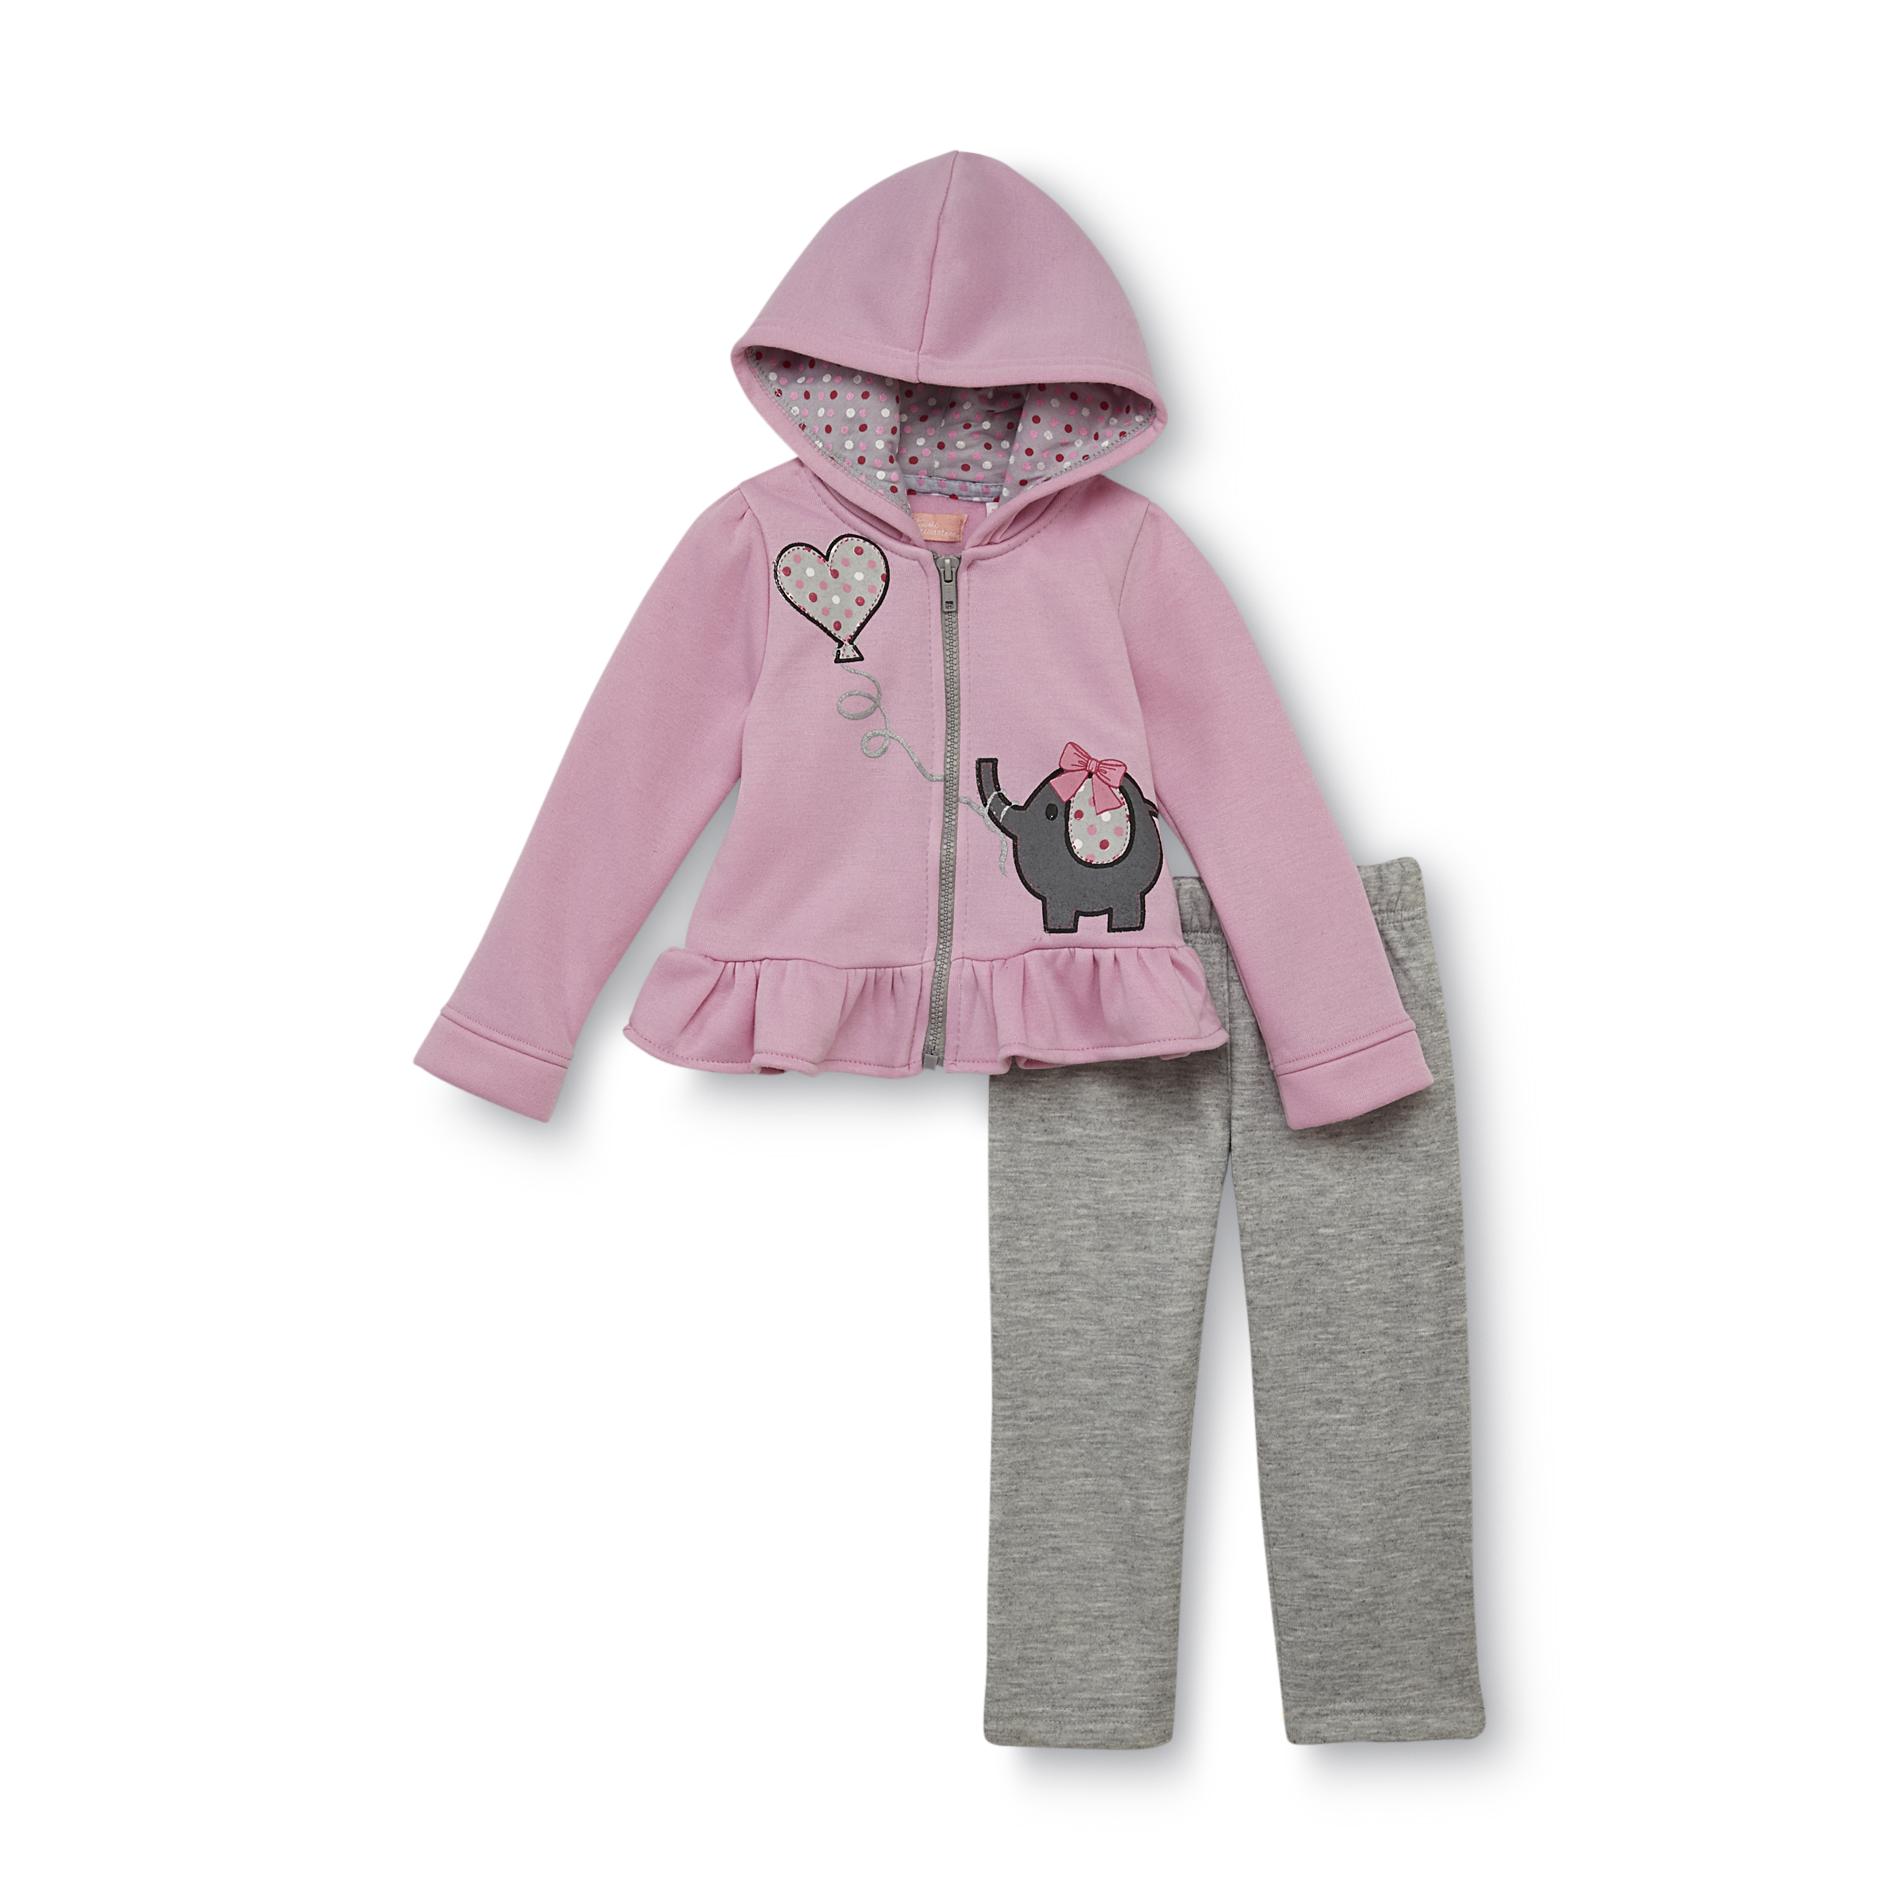 Kids Headquarters Infant & Toddler Girl's Fleece Hoodie Jacket & Pants - Elephant